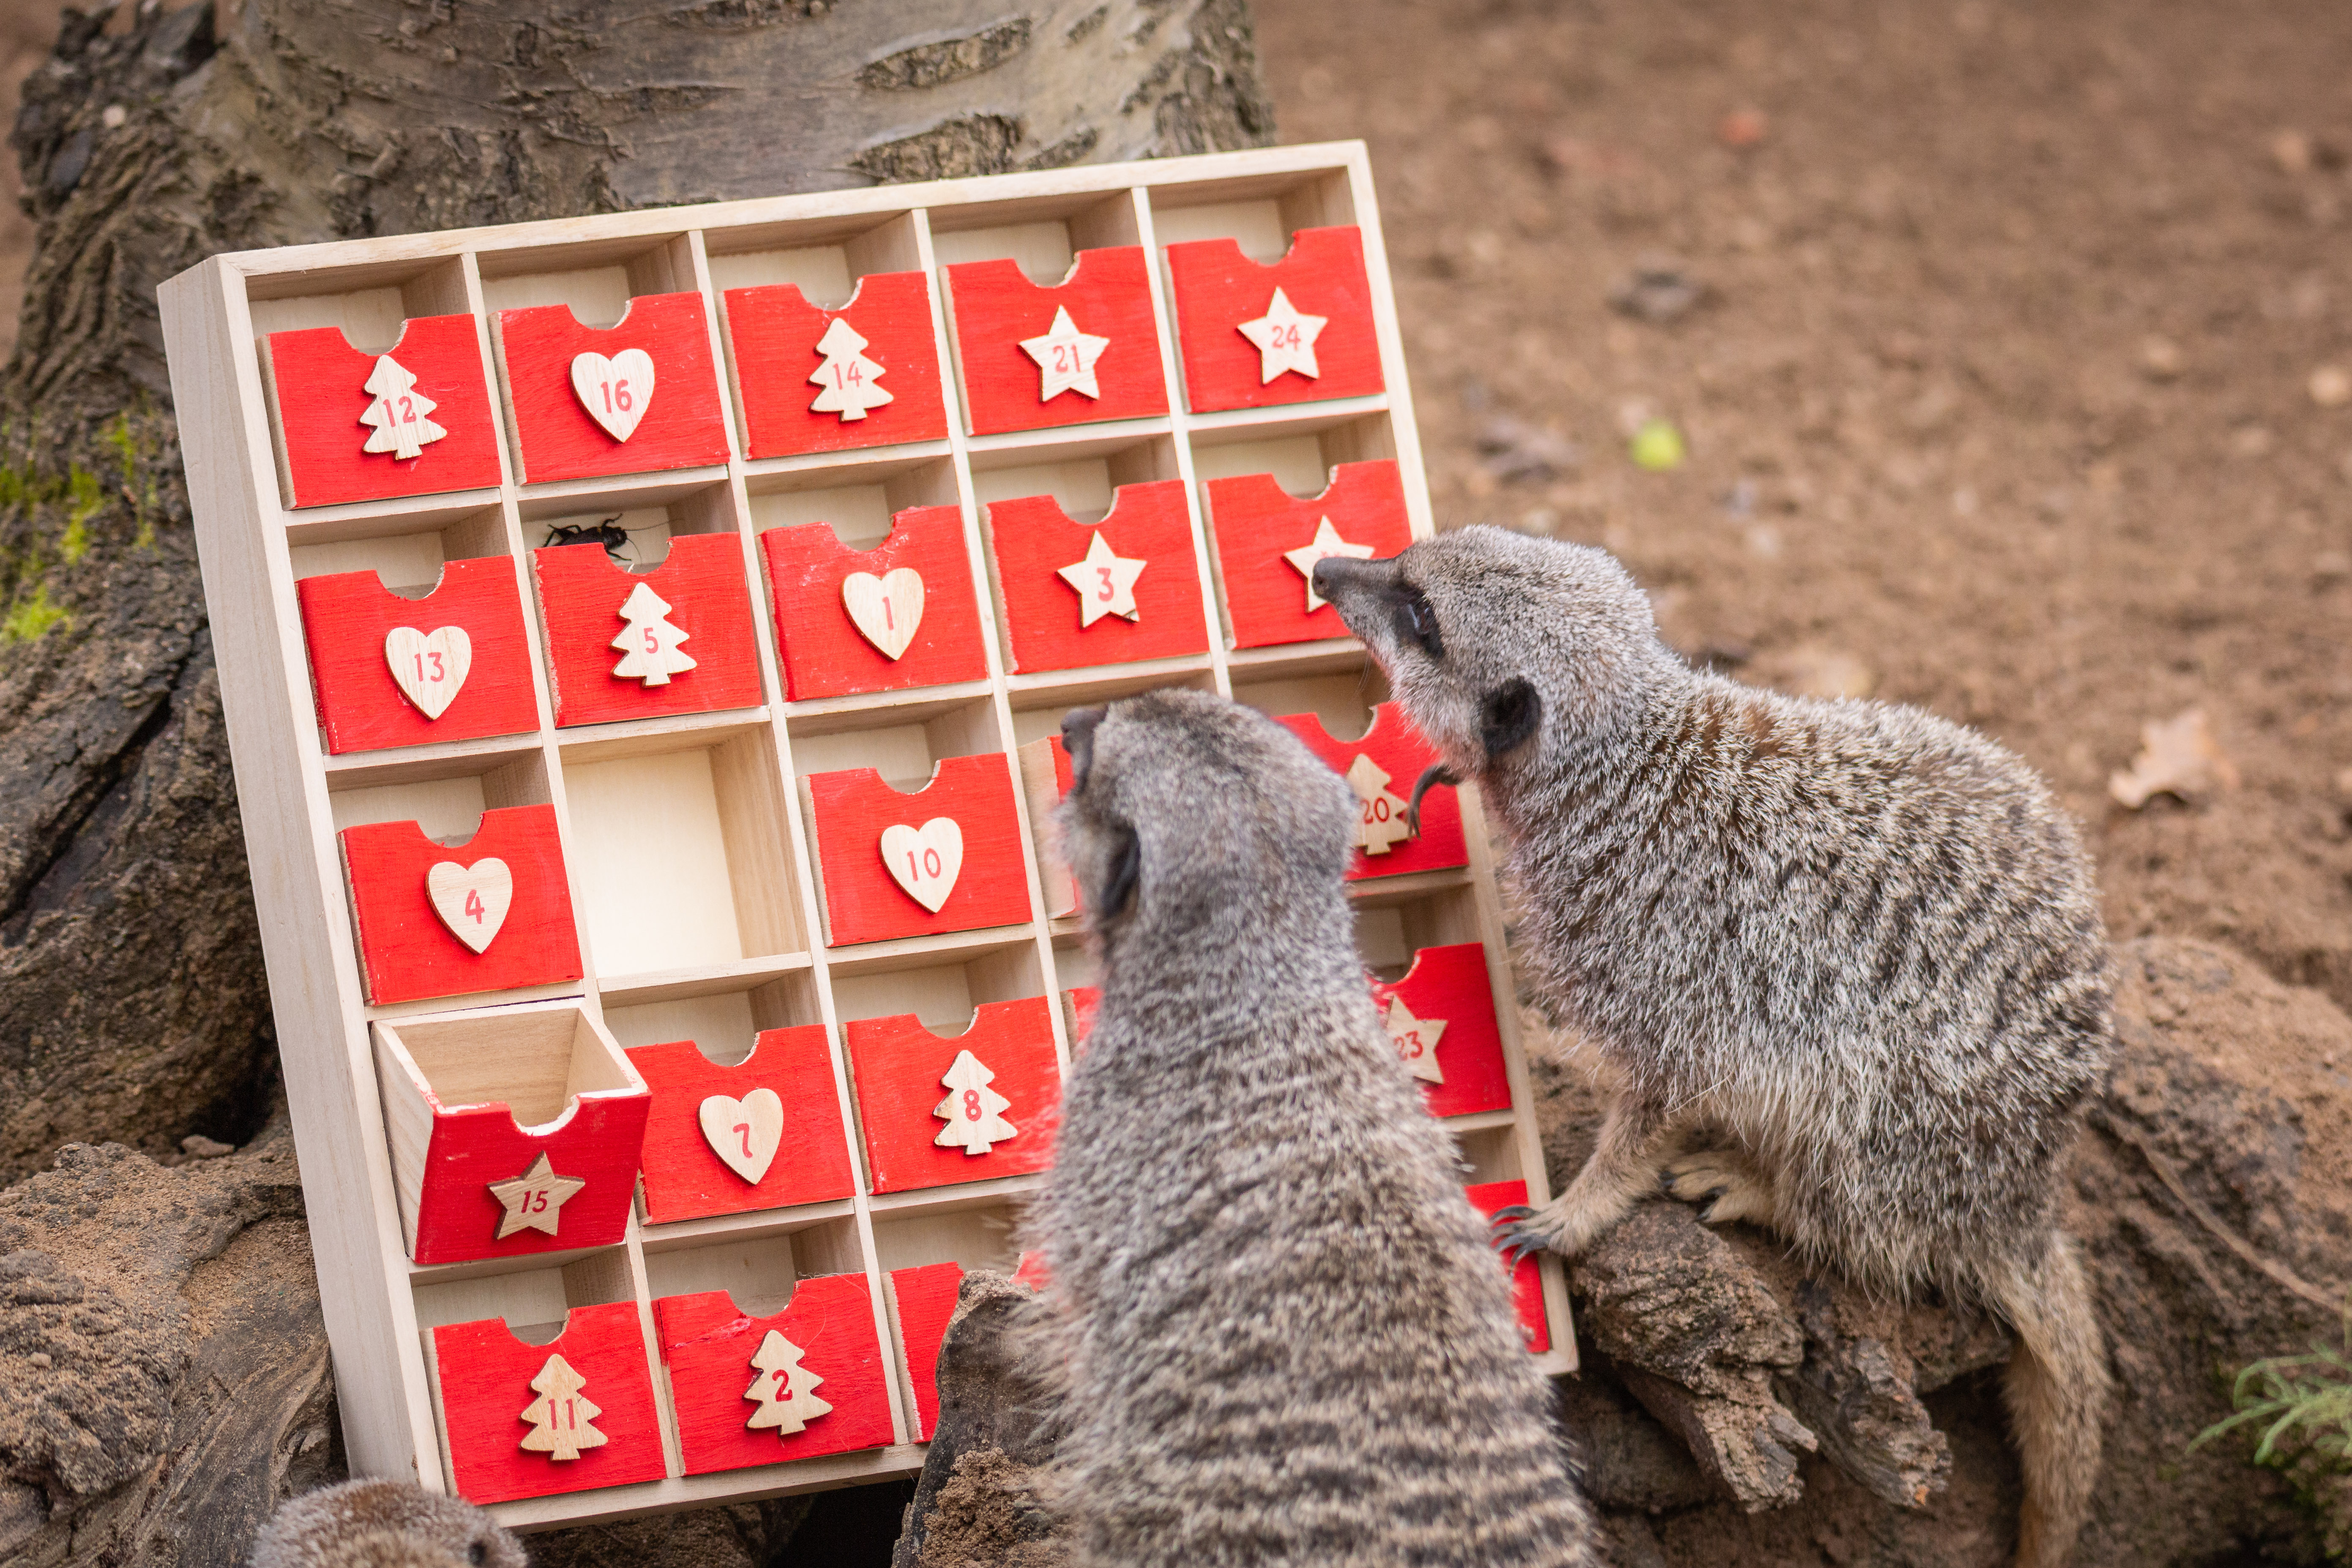 Meerkats open all the doors on their advent calendar